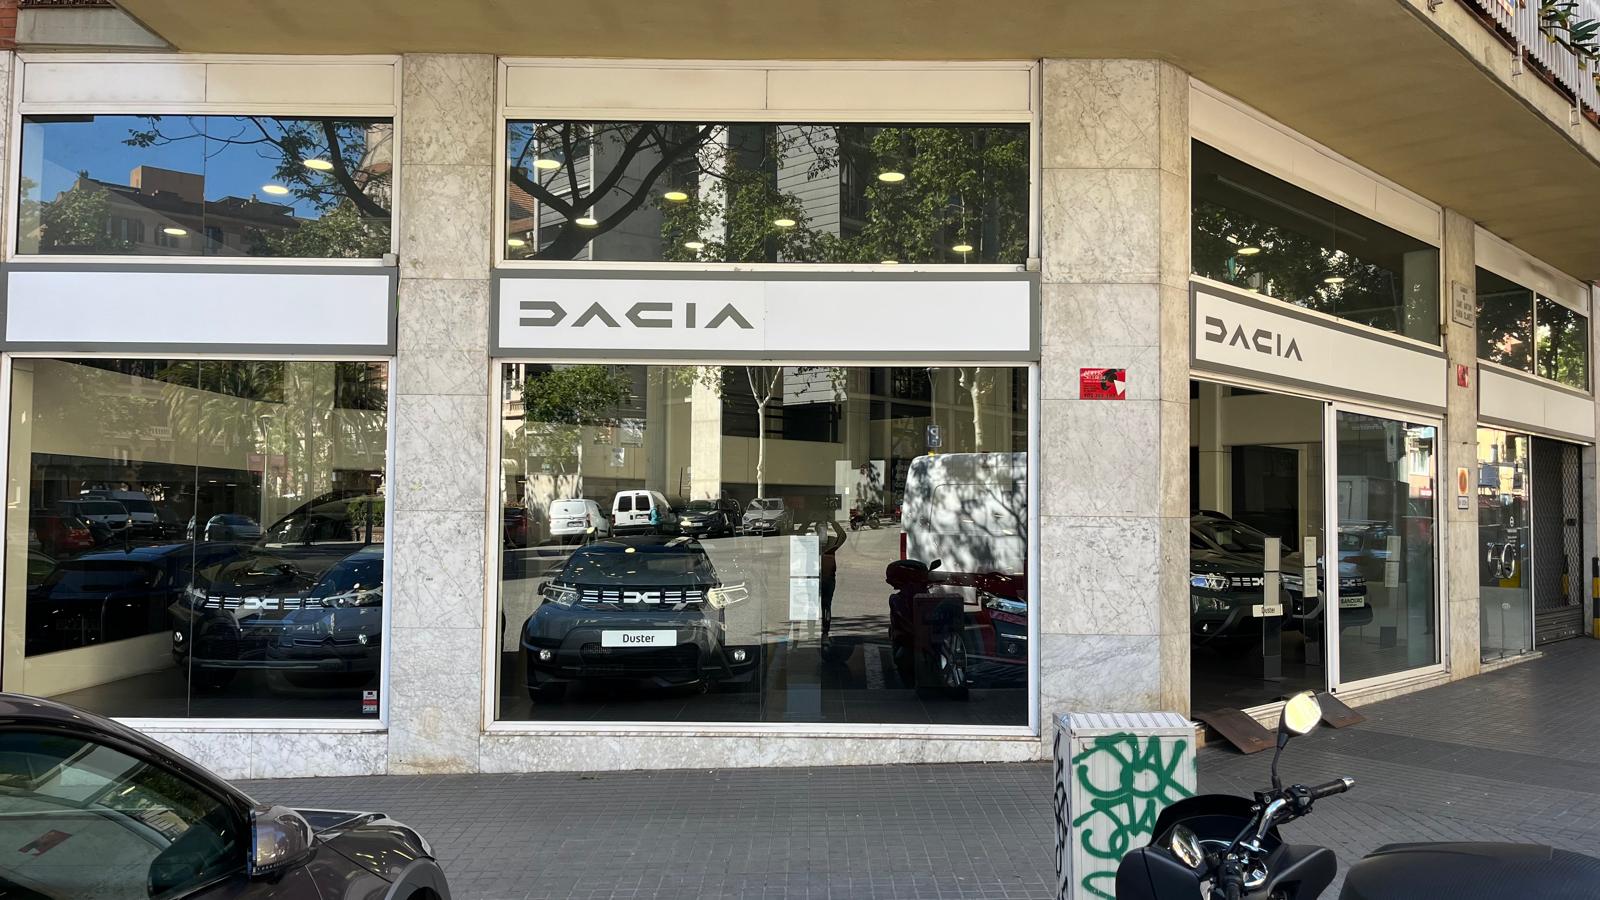 Concesionario Dacia Sagrada Familia Barcelona